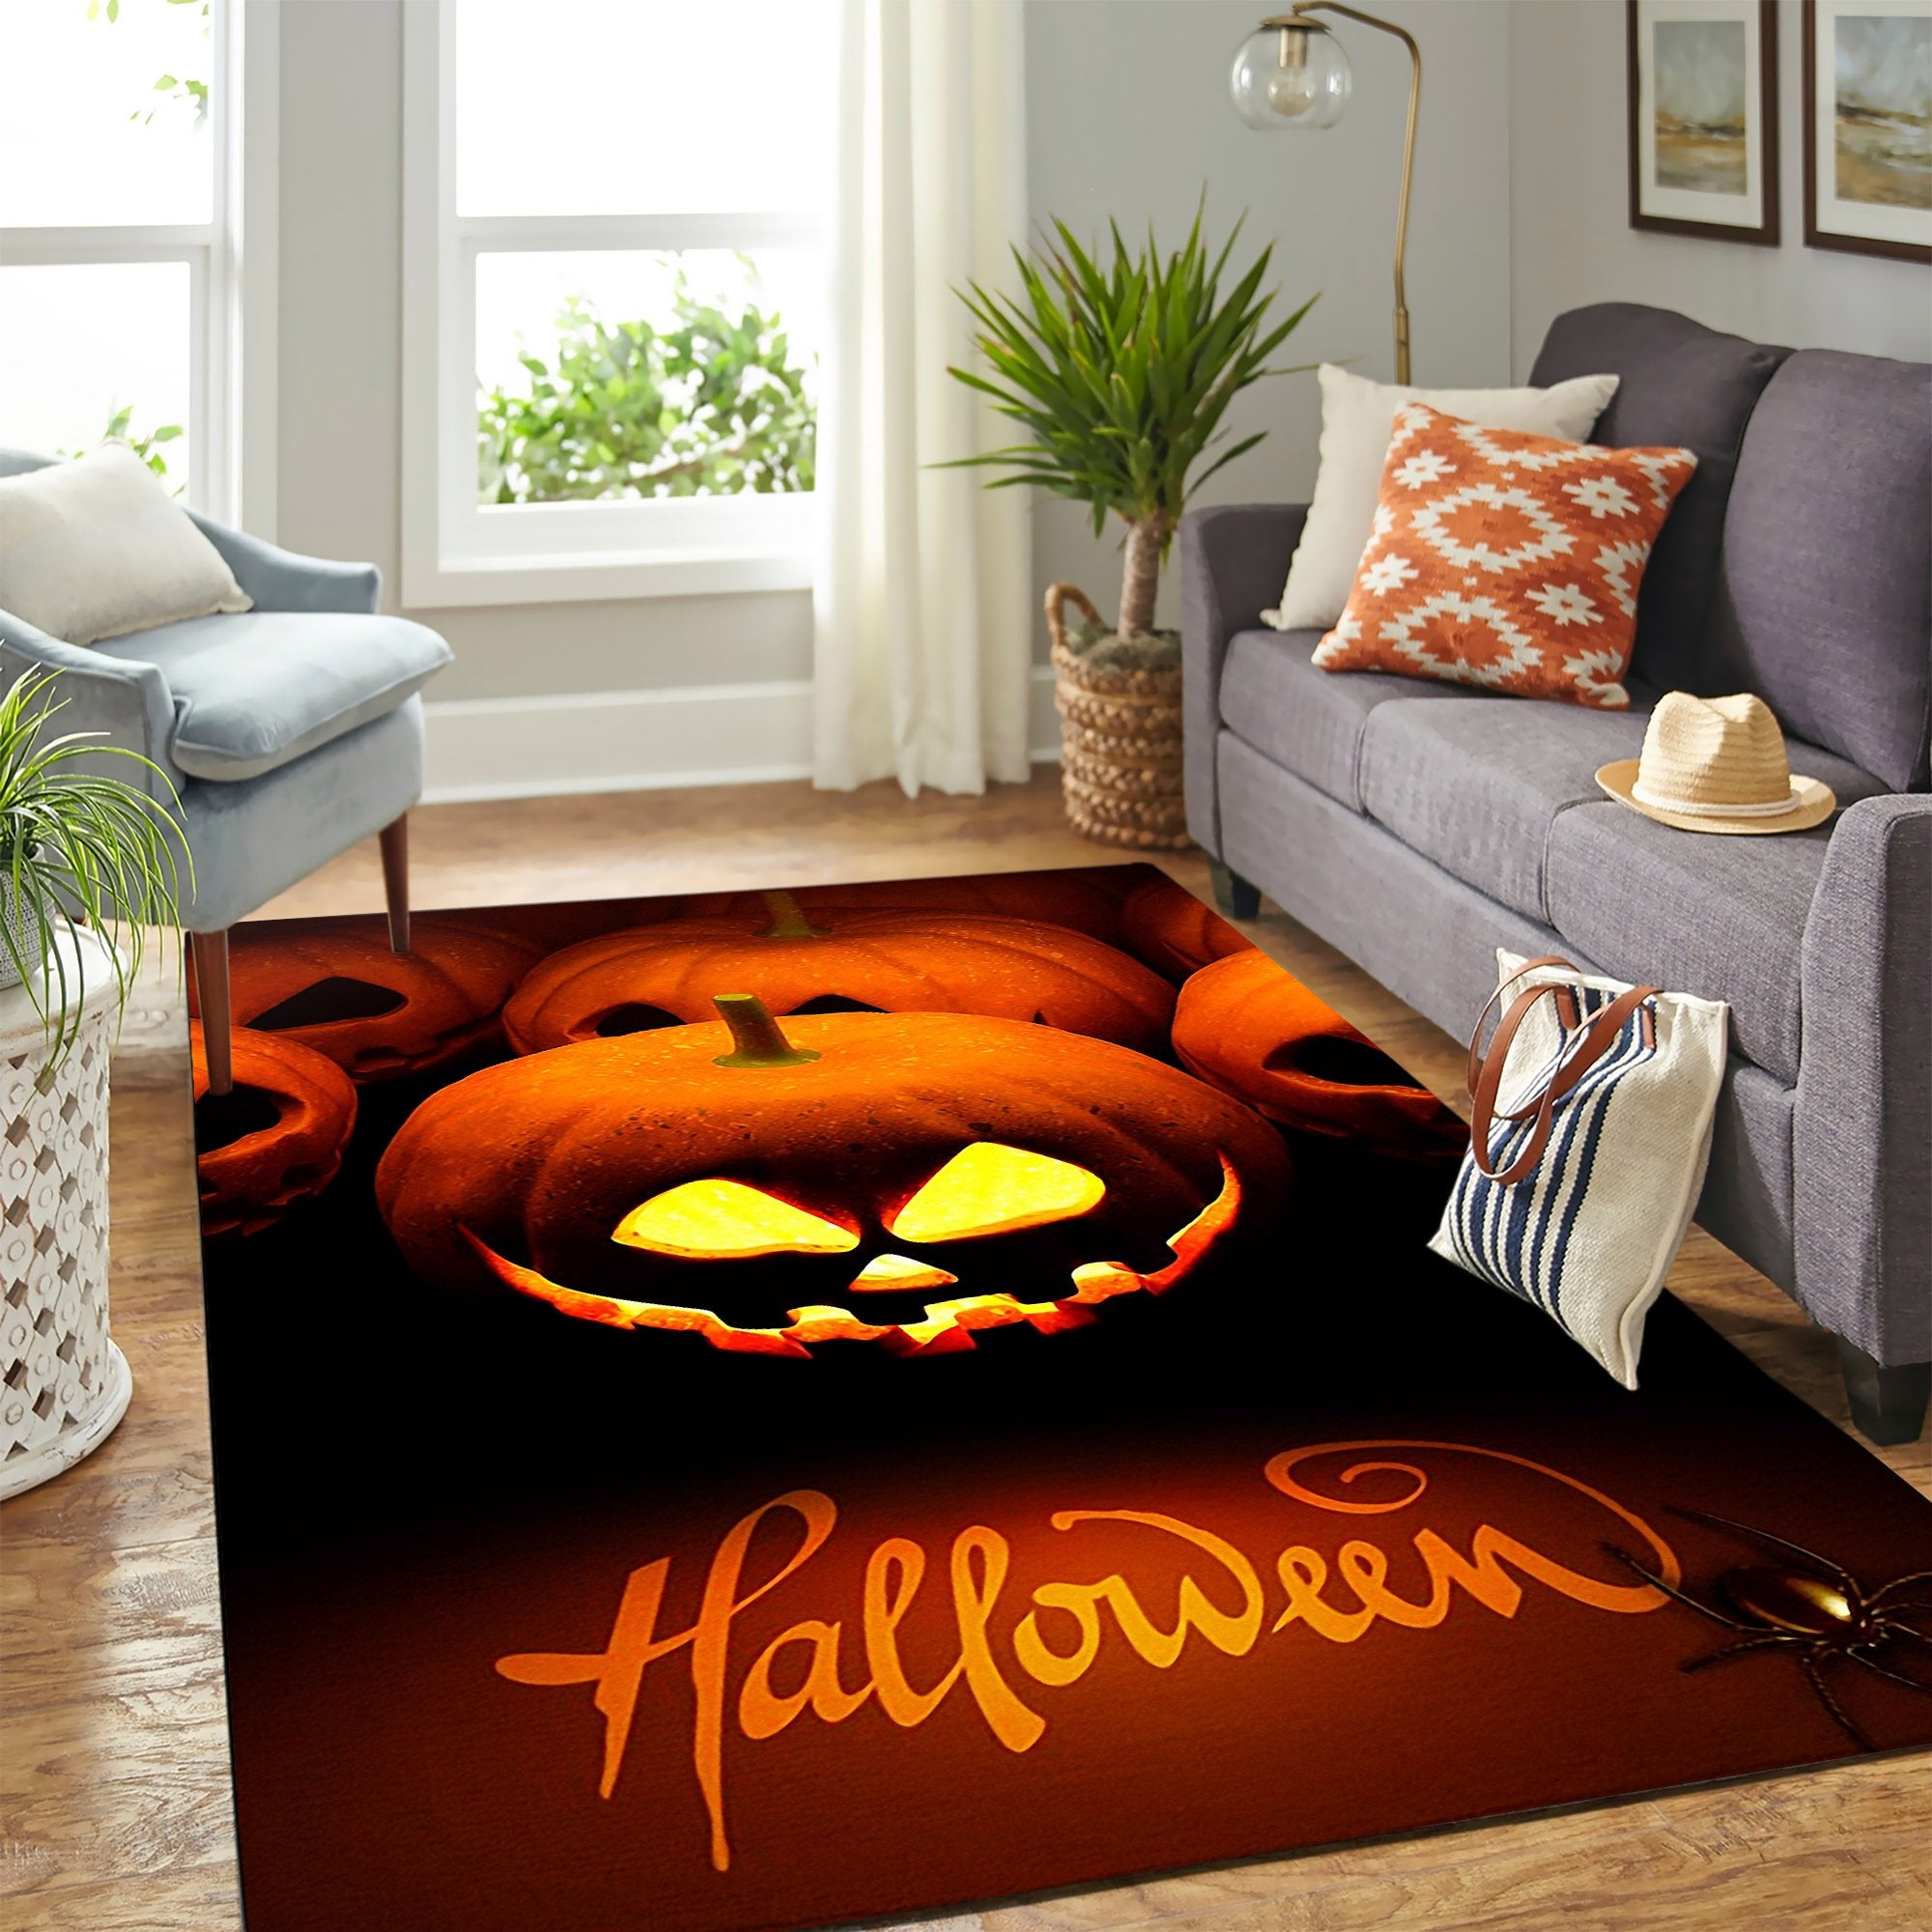 Halloween New Carpet